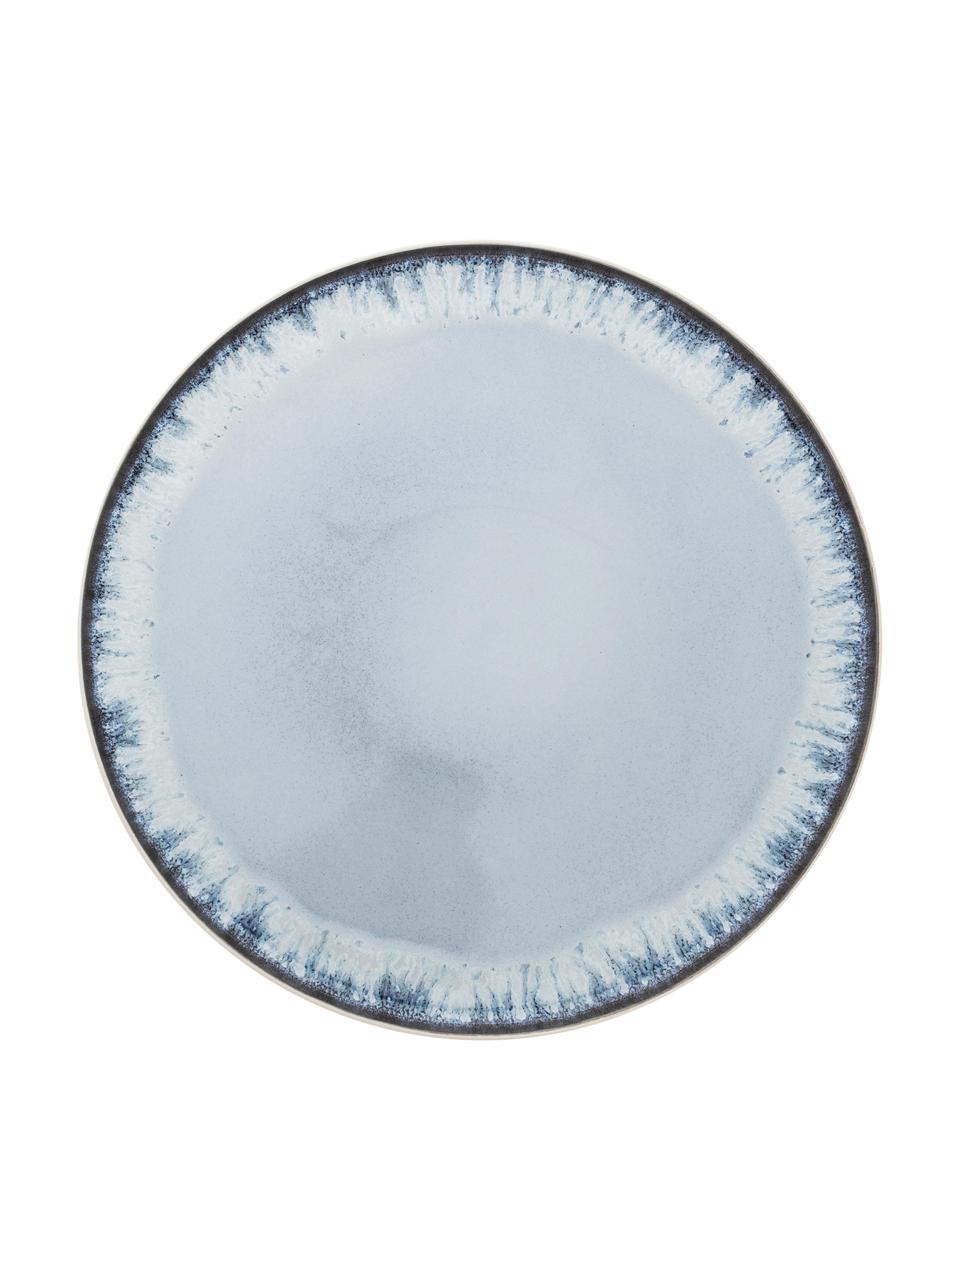 Platos llano Inspiration, 2 uds., Gres, Azul, beige claro, Ø 27 cm